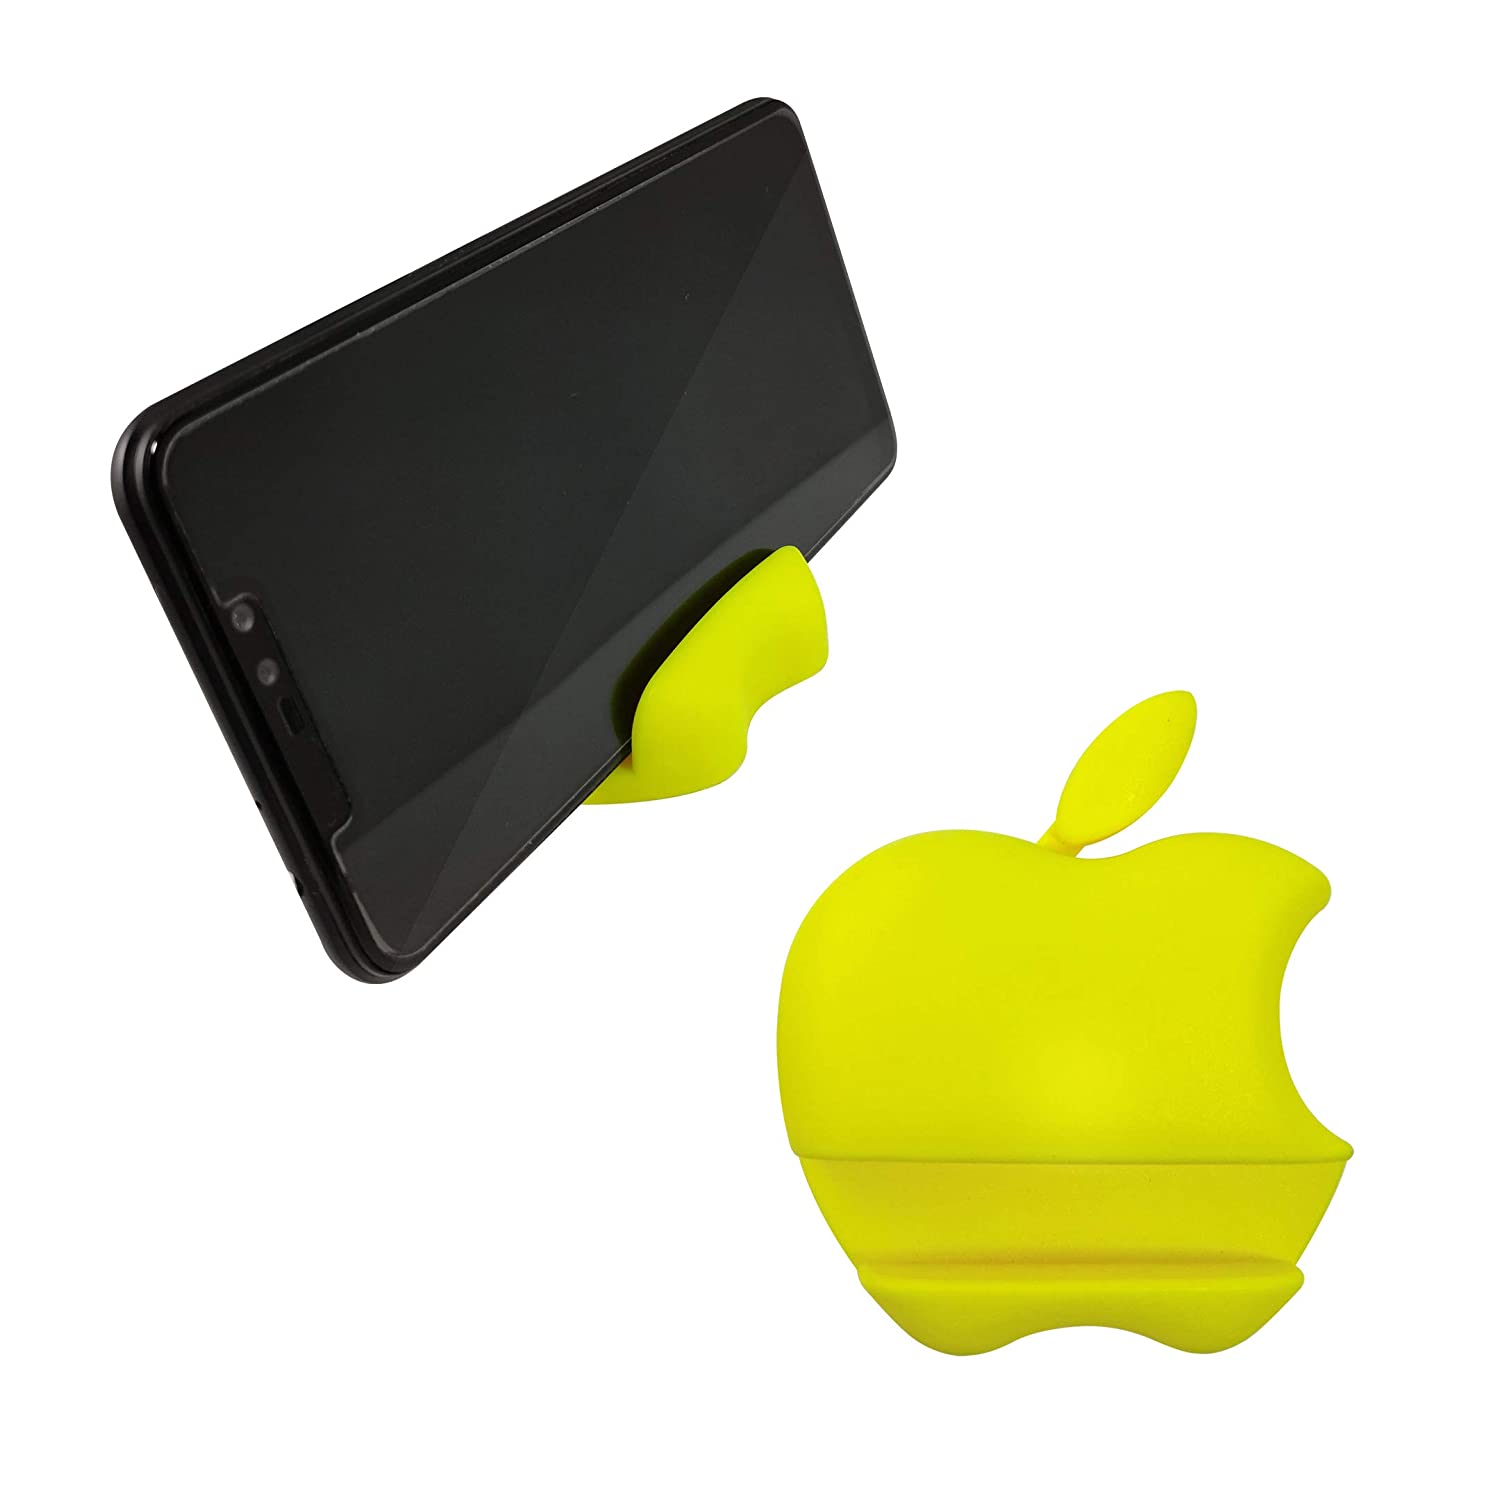 4700 Apple Shape Mobile Holder Multi Angle Adjustable Fold